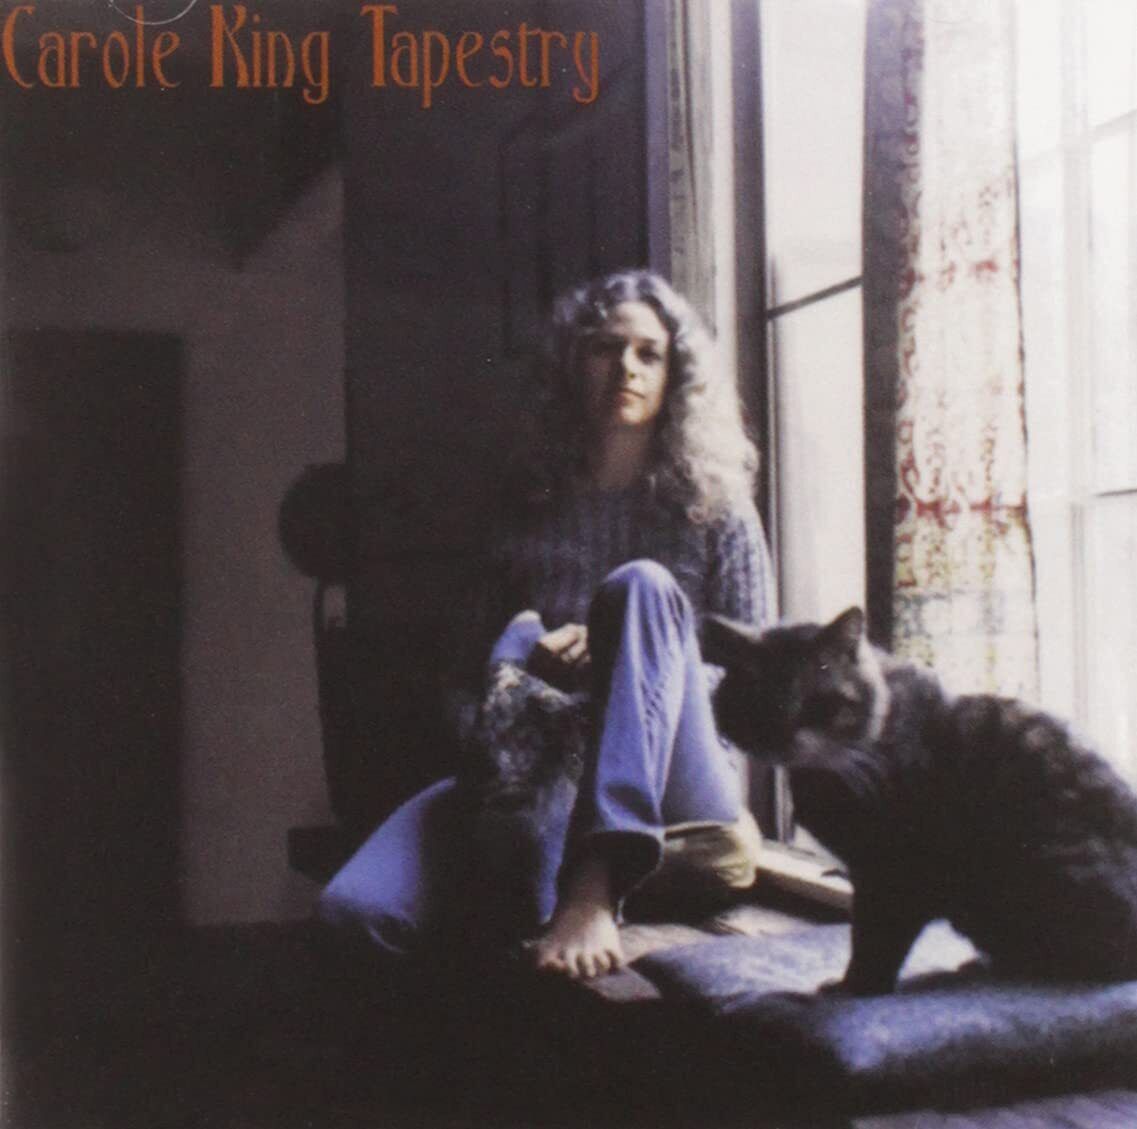 Carole King Carole King Tapestry (CD)